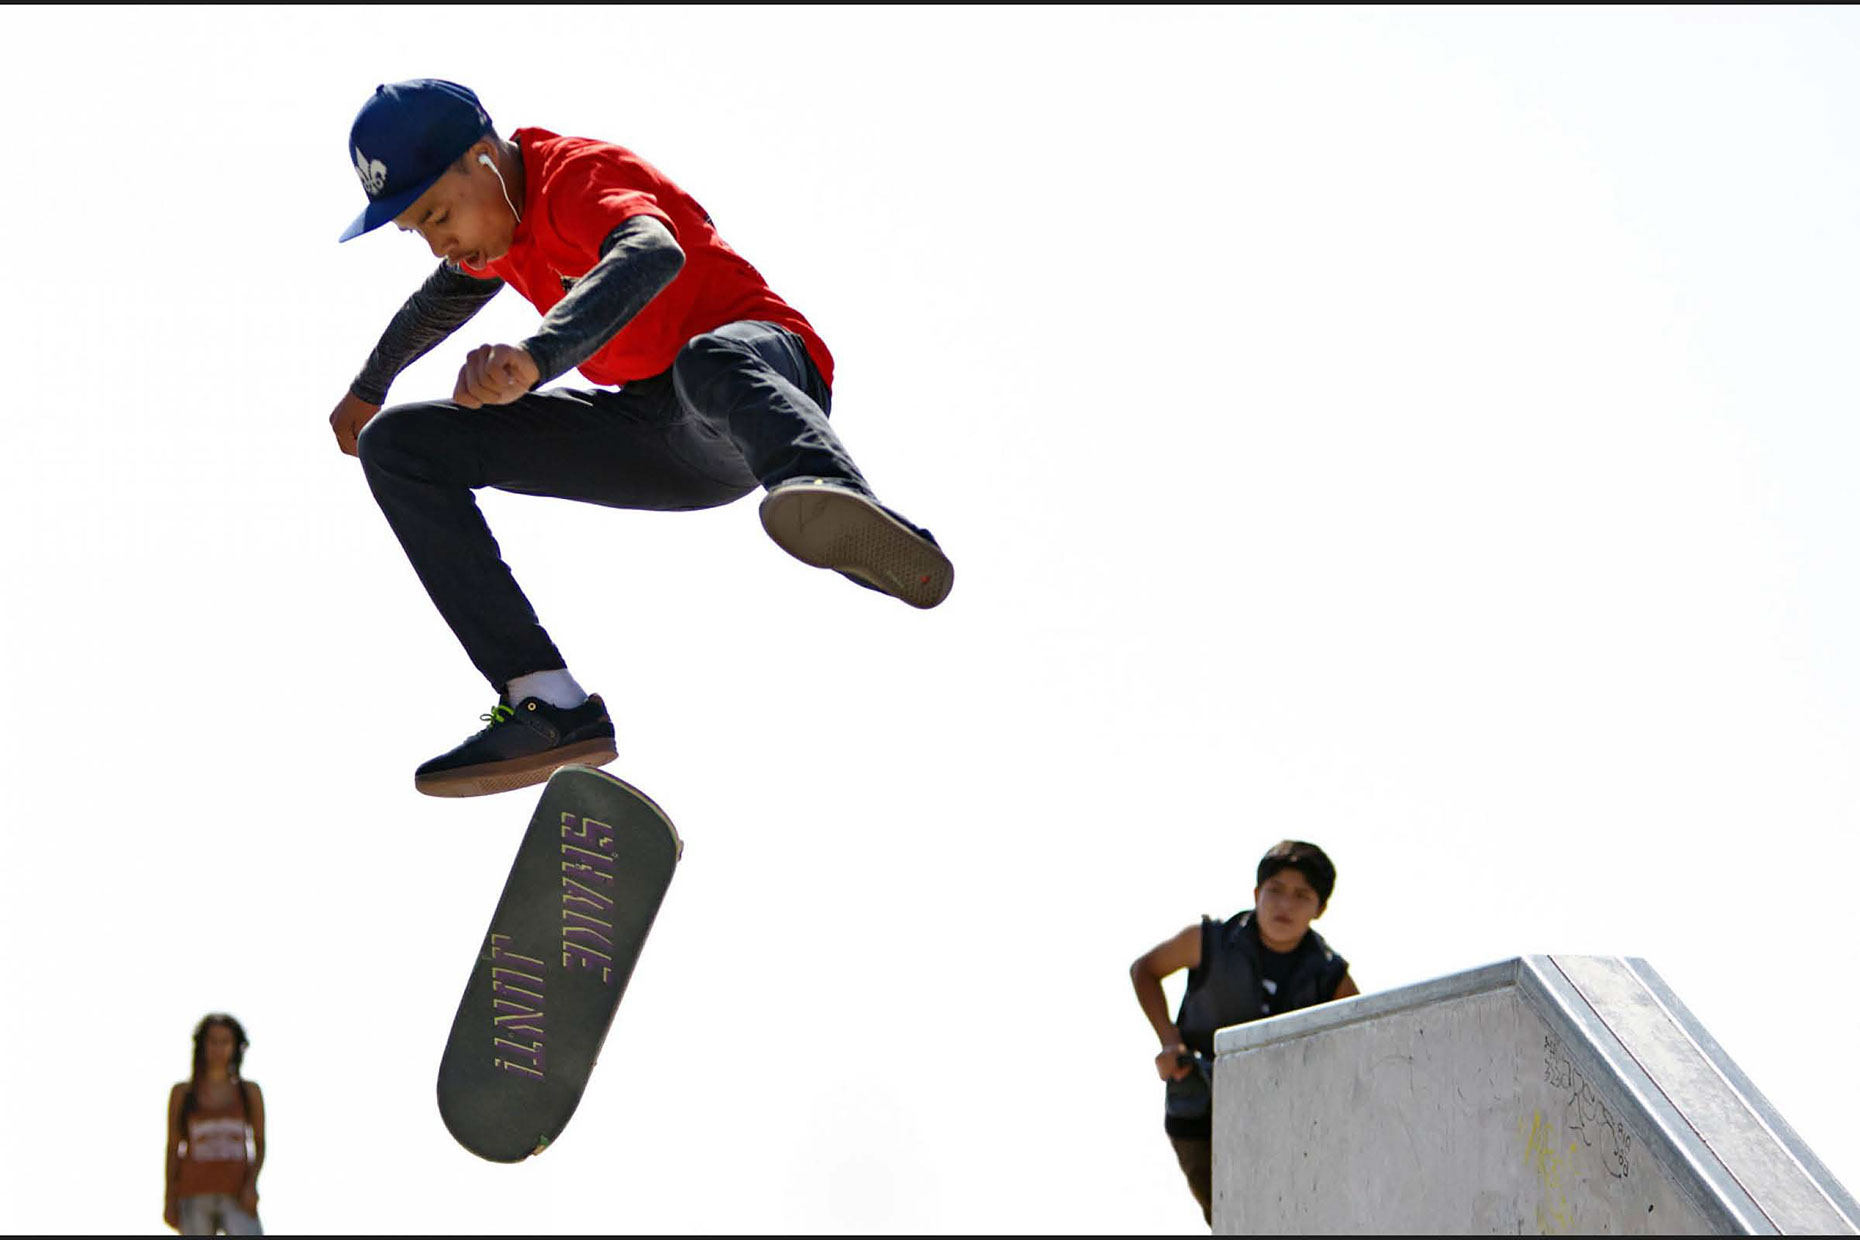 Photography_Lifestyle_Skateboard Tricks in Skate Park-Tony Garcia